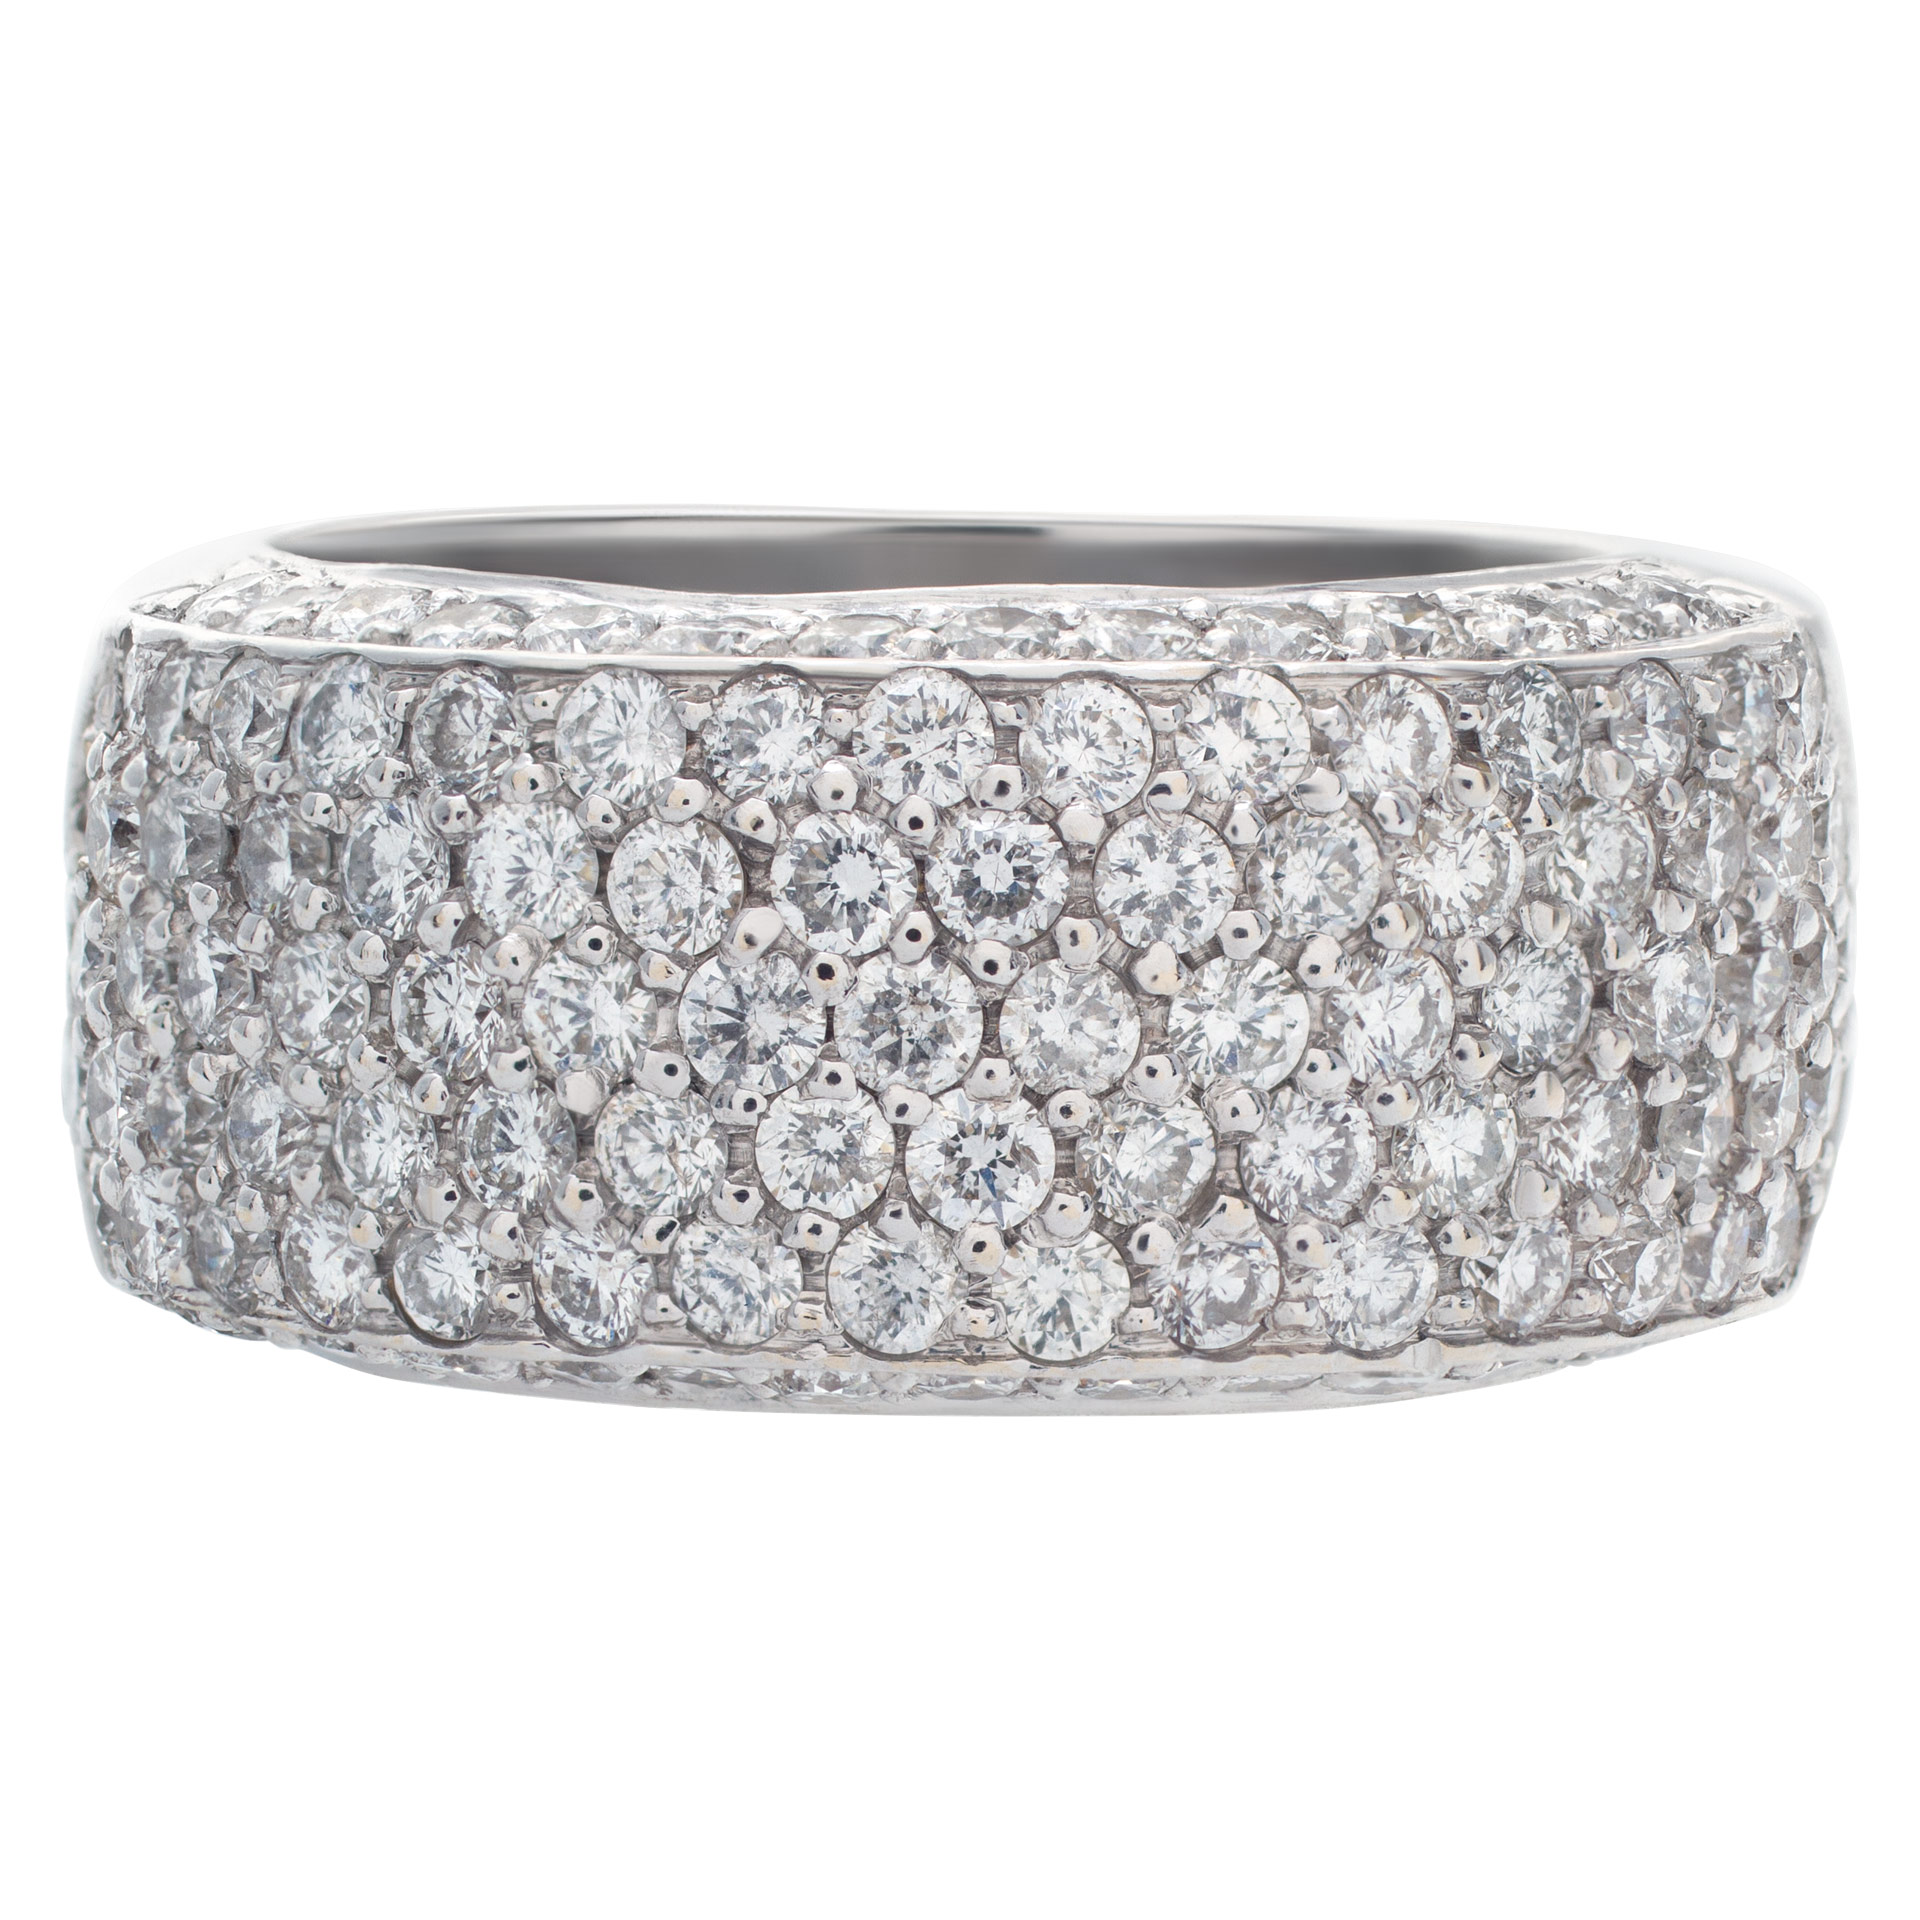 Sparkling bright micro pave diamond ring set in 18k white gold